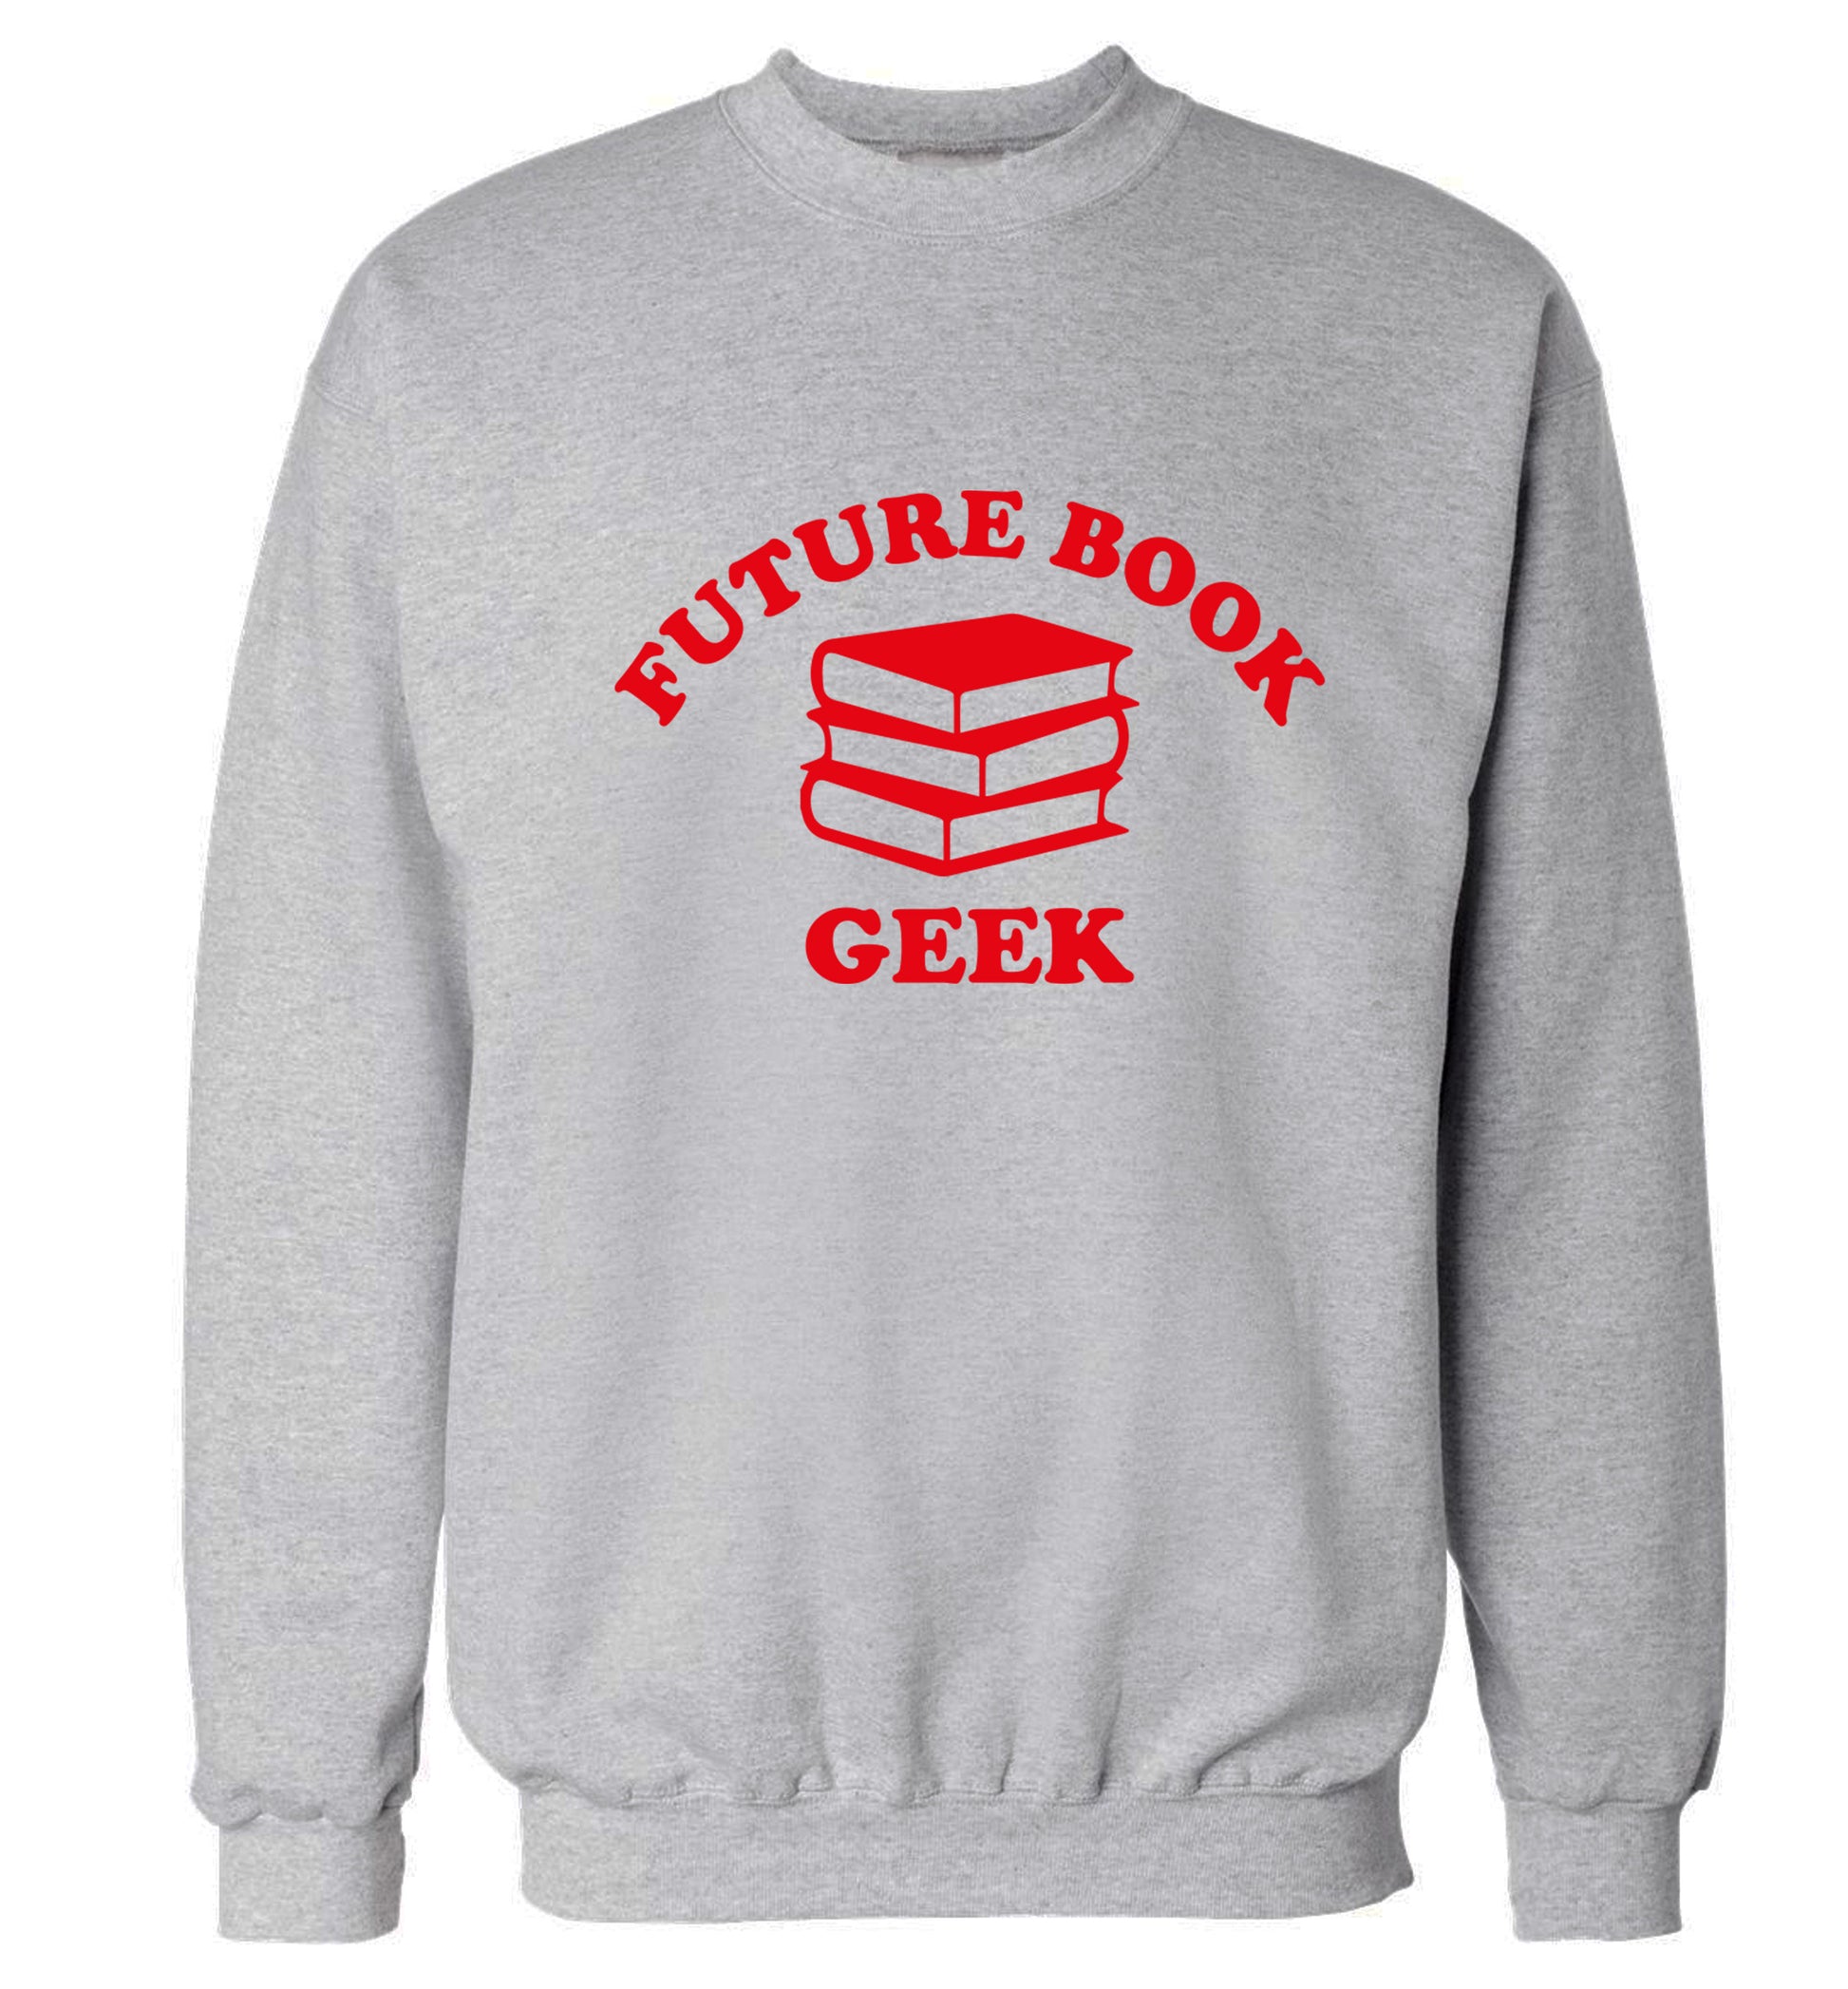 Future book geek Adult's unisex grey Sweater 2XL